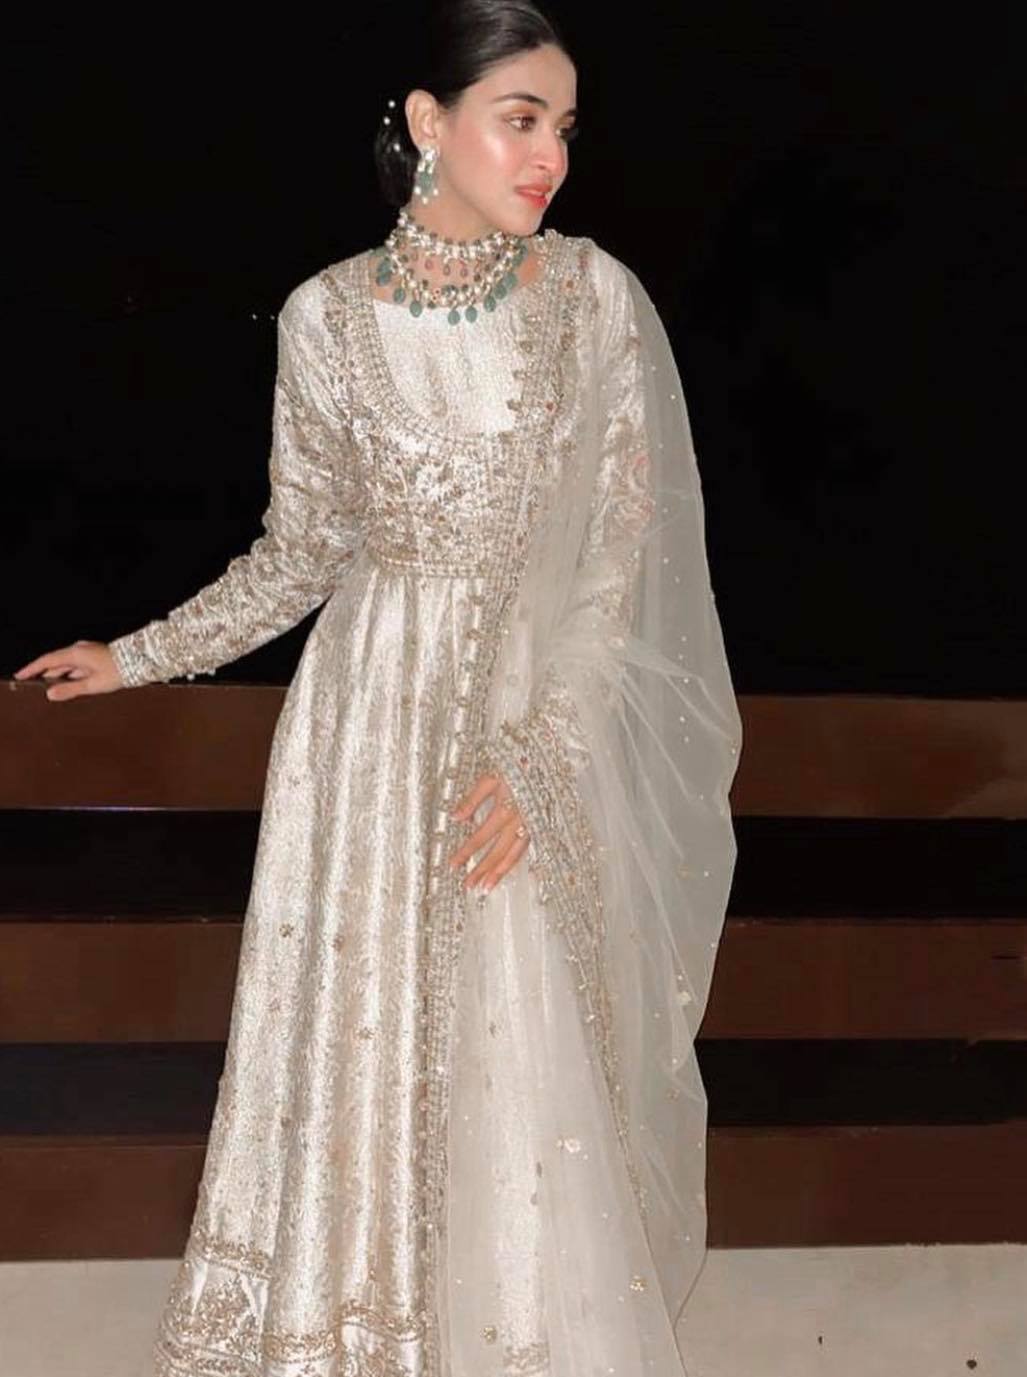 velvet dress designs pakistani wedding | pakistani stylish fashion